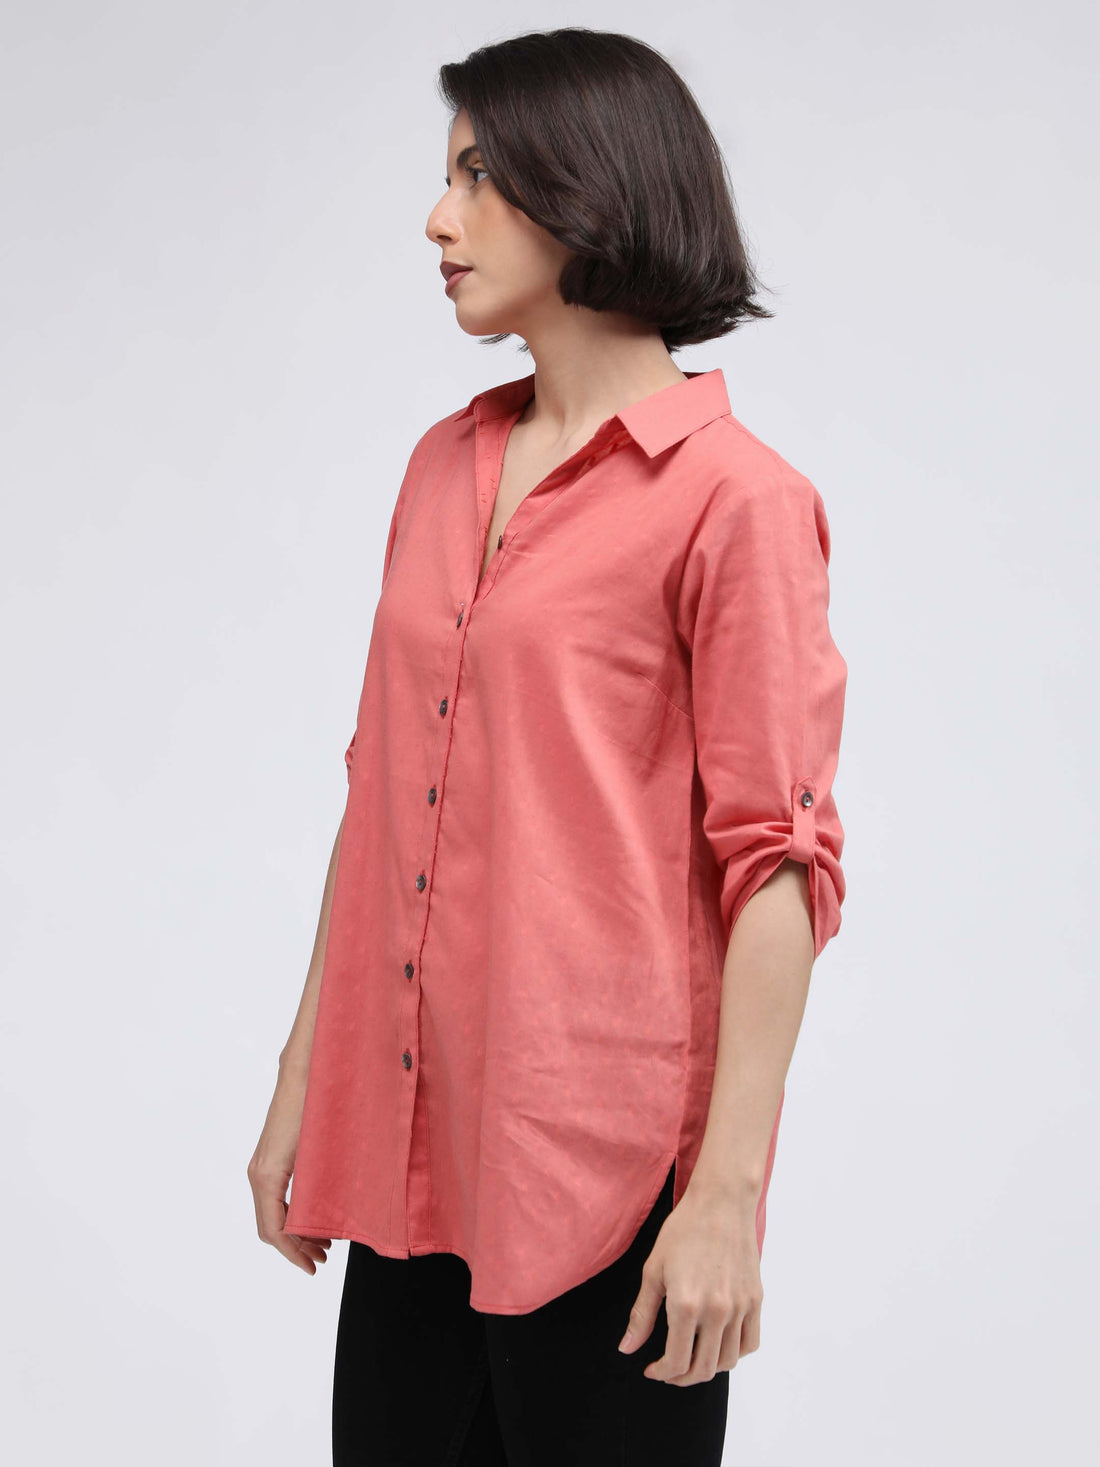 Pink shirt